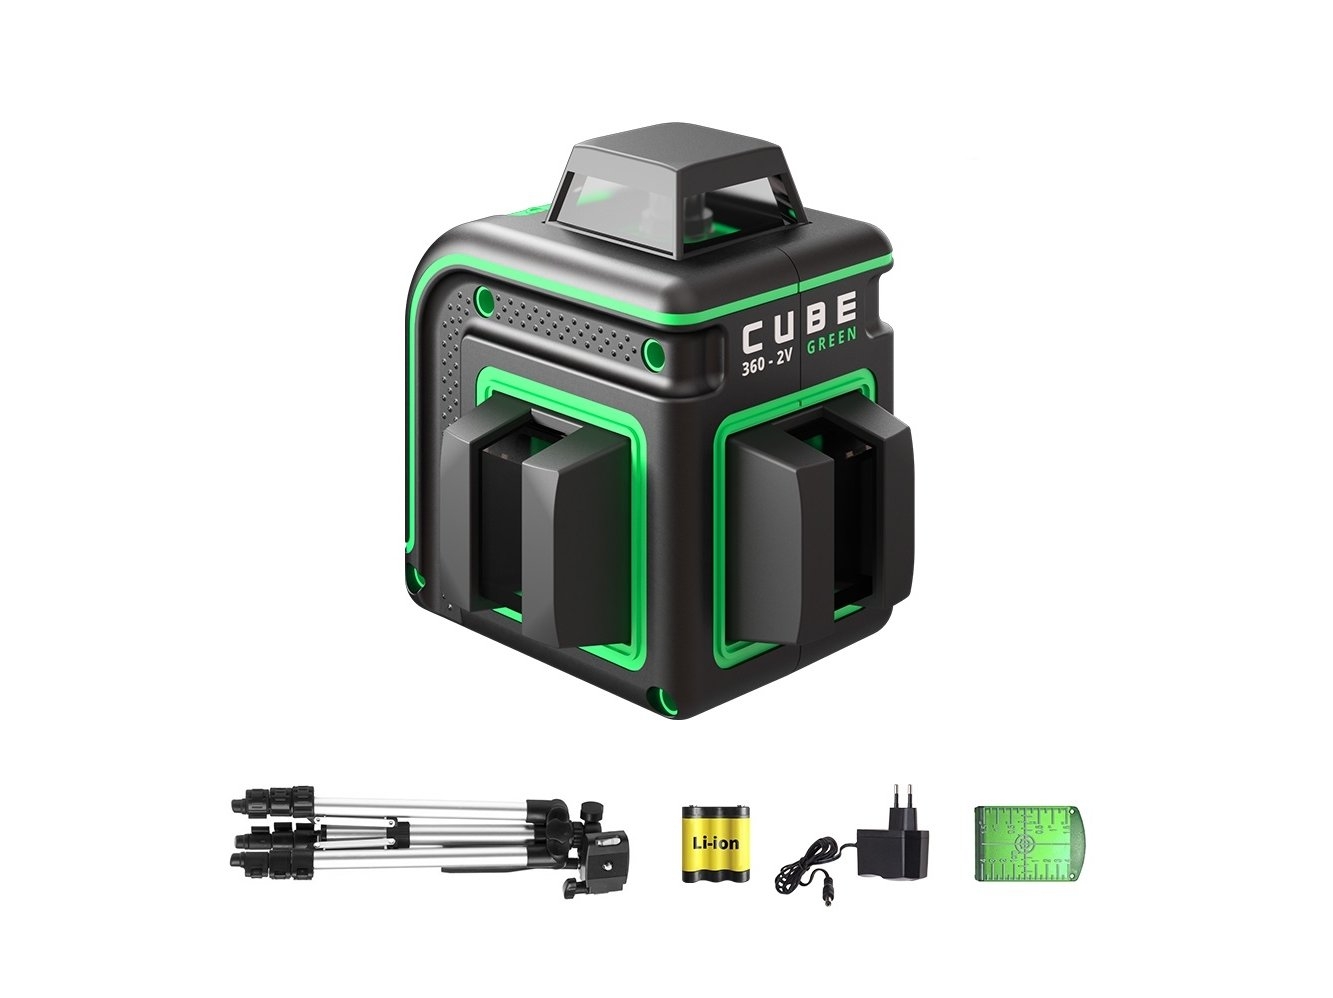 Cube 360 ultimate edition. Ada Cube 360 2v Green professional Edition. Уровень лазерный ada Cube 3-360. Лазерный уровень ada Cube 3-360 Green Home Edition а00566. Лазерный уровень самовыравнивающийся ada instruments Cube 3-360 Green Basic Edition.